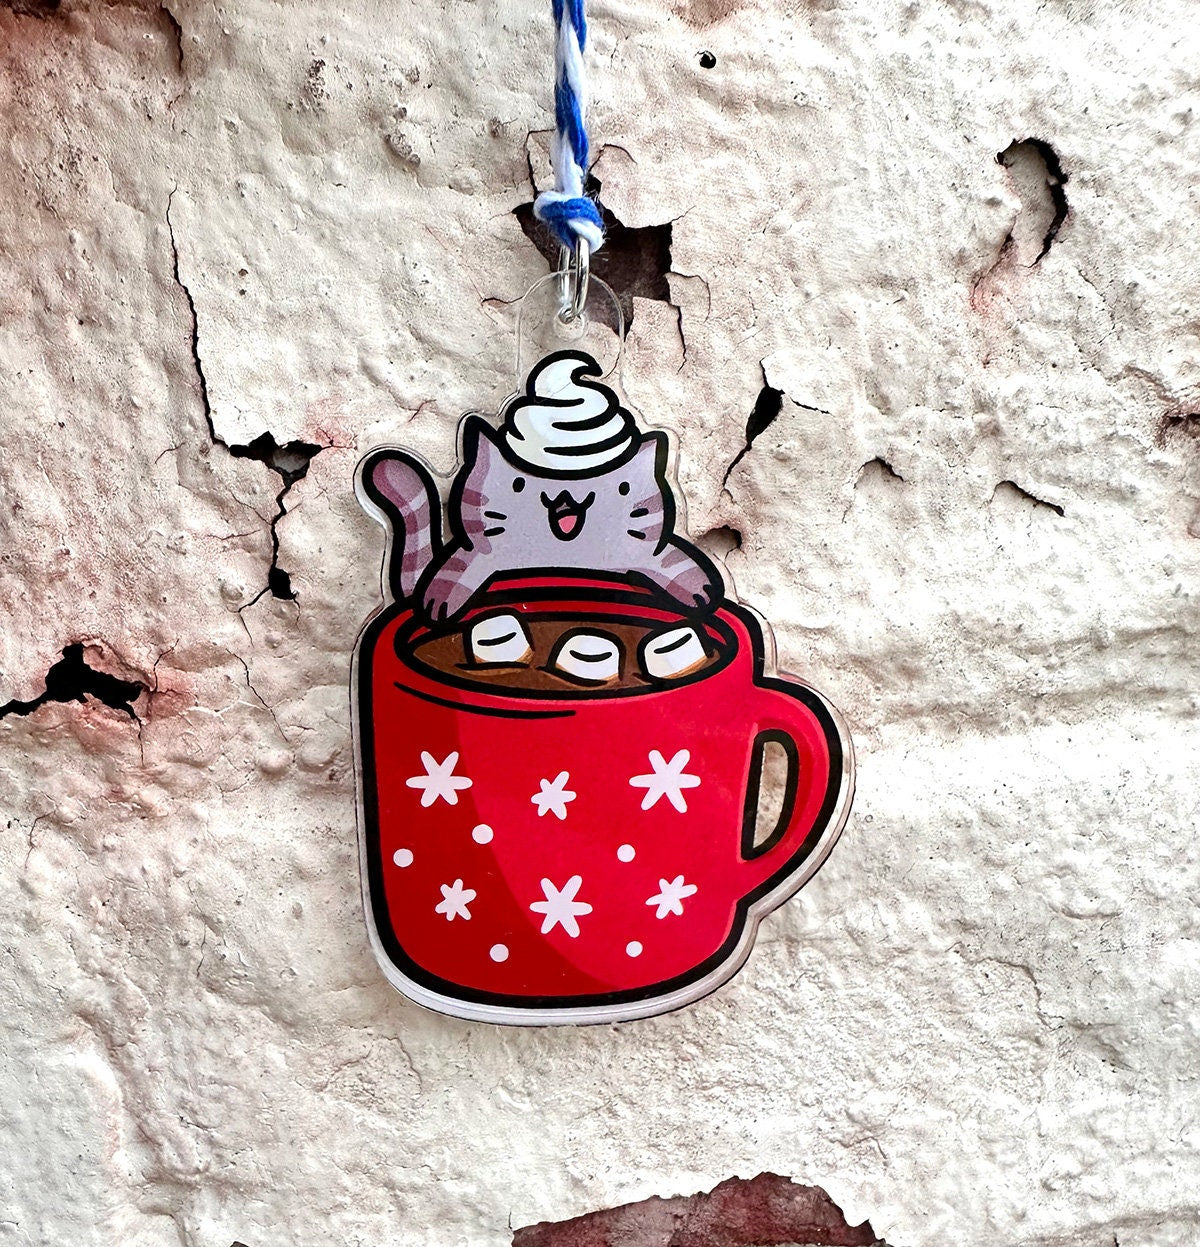 Hot Chocolate Cat Ornament